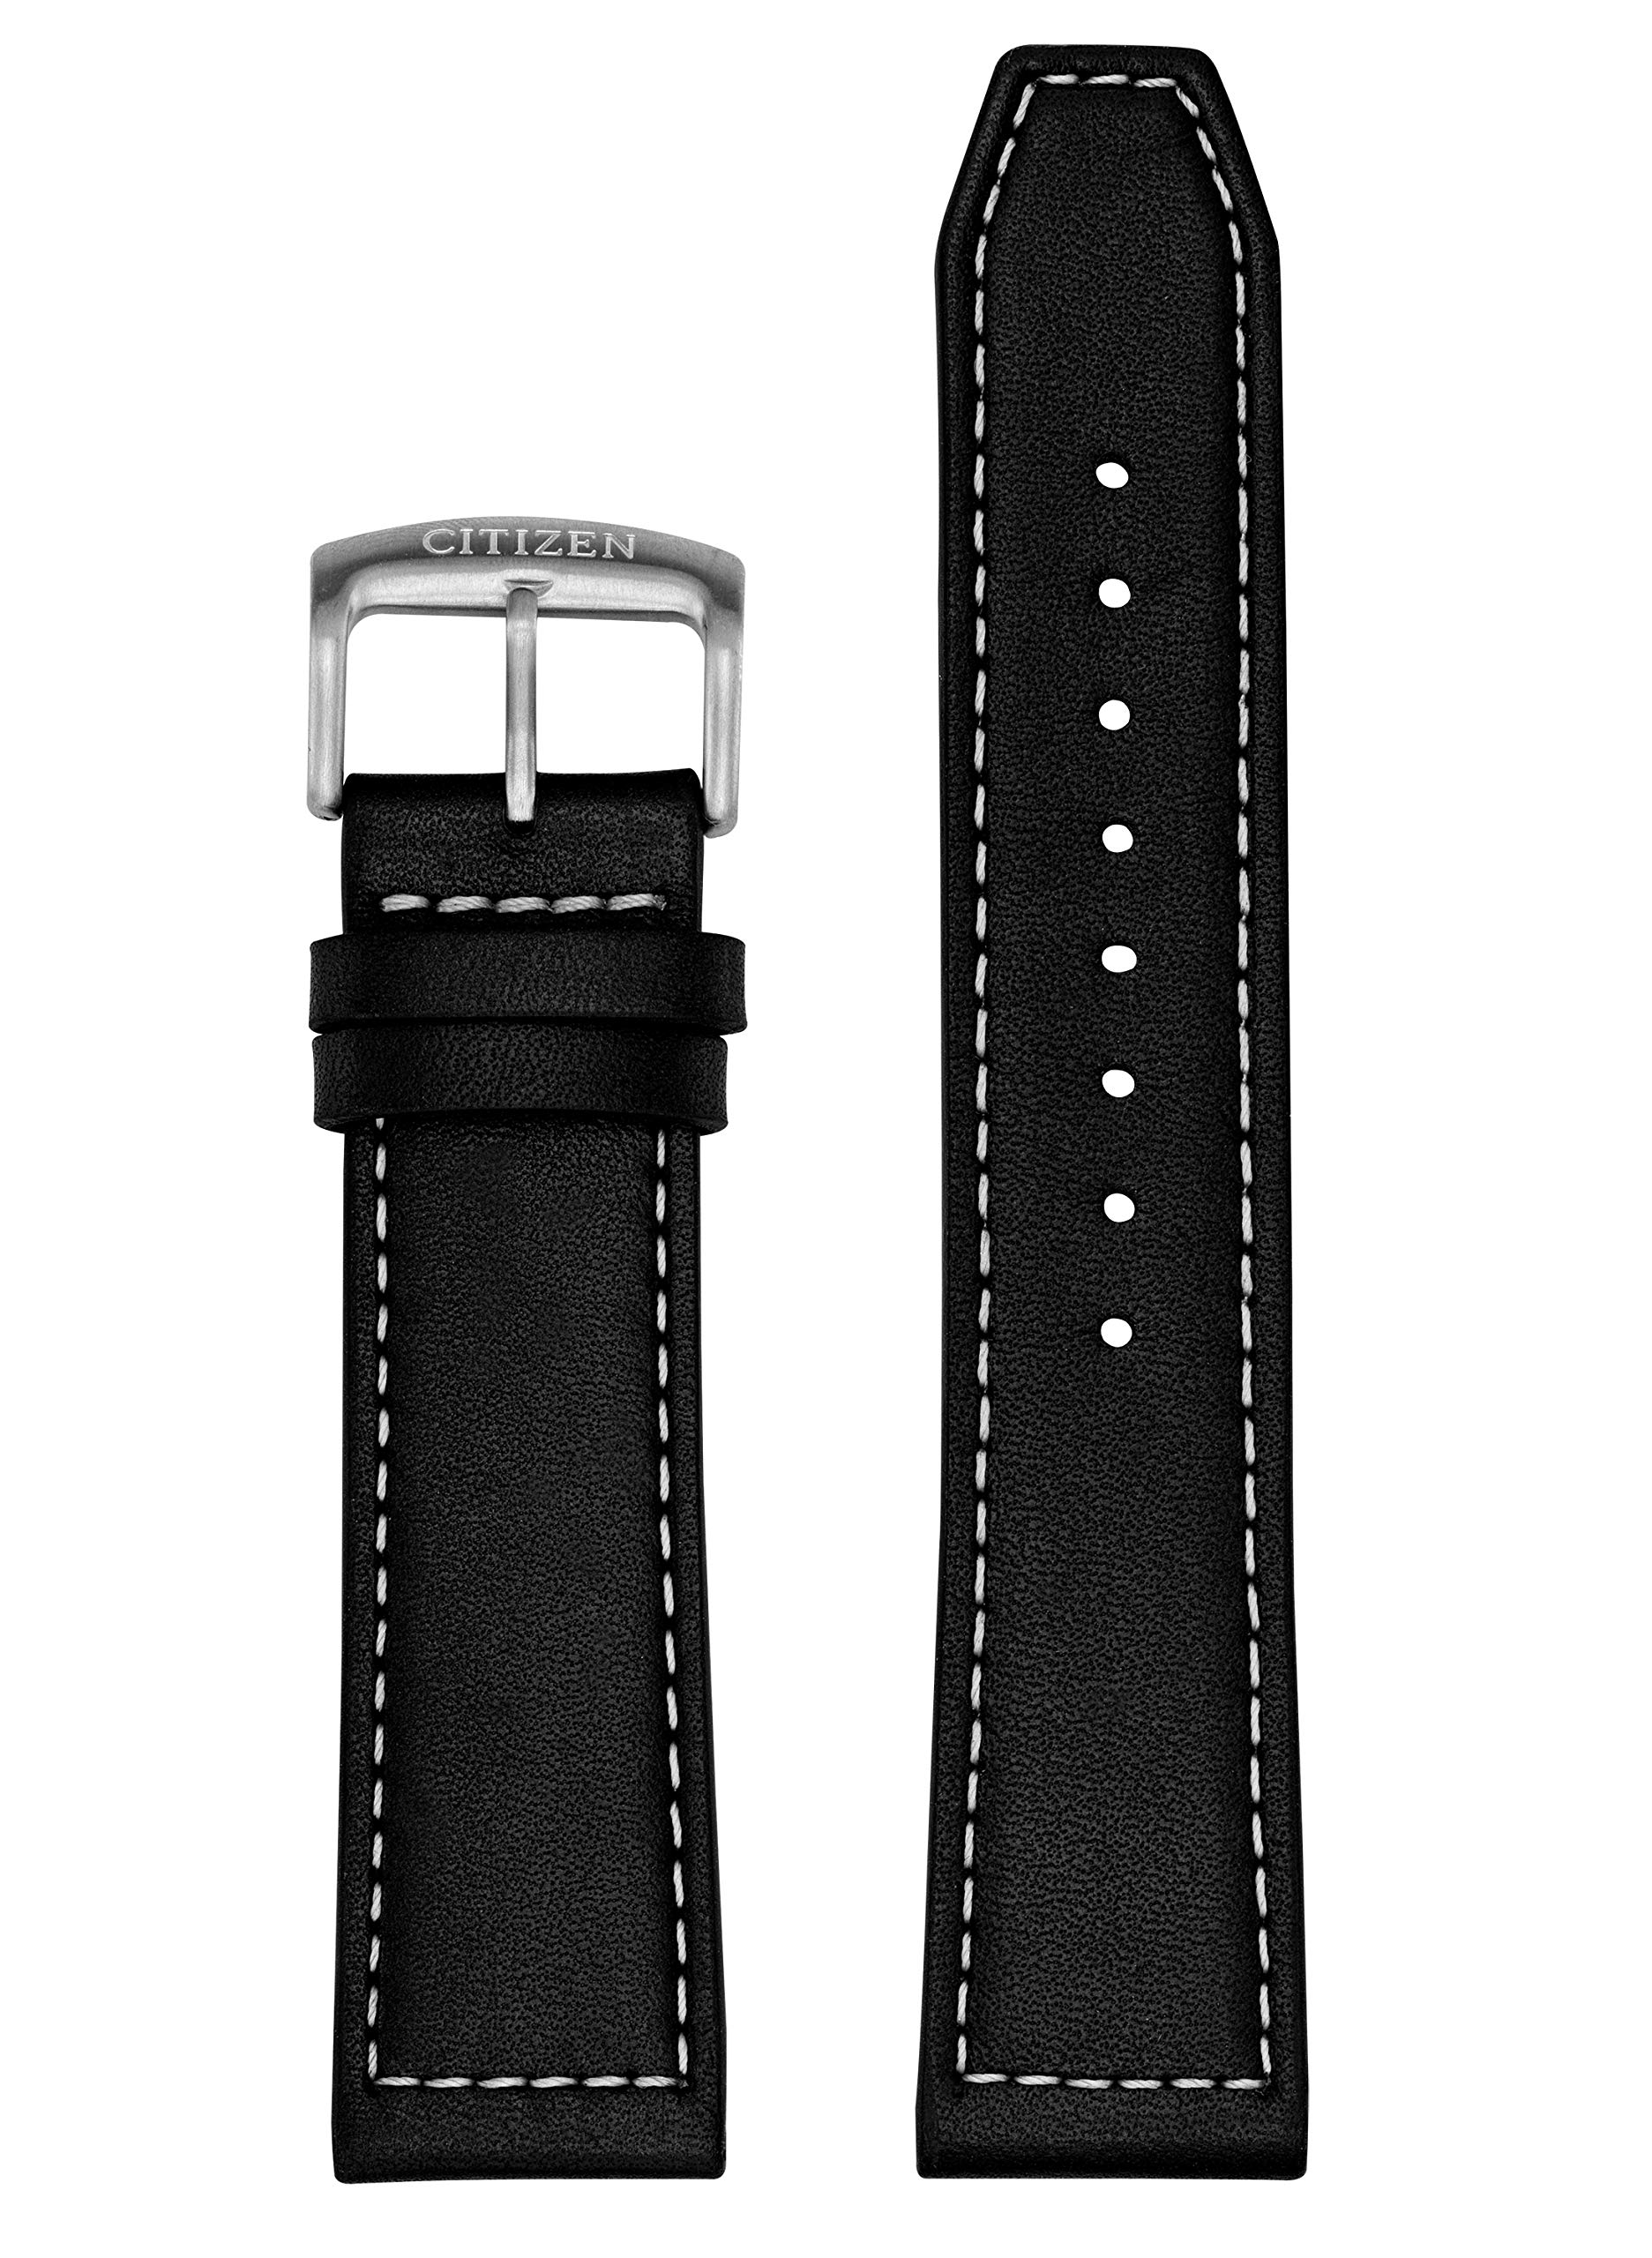 Citizen CZ Smart 22mm smartwatch interchangeable strap